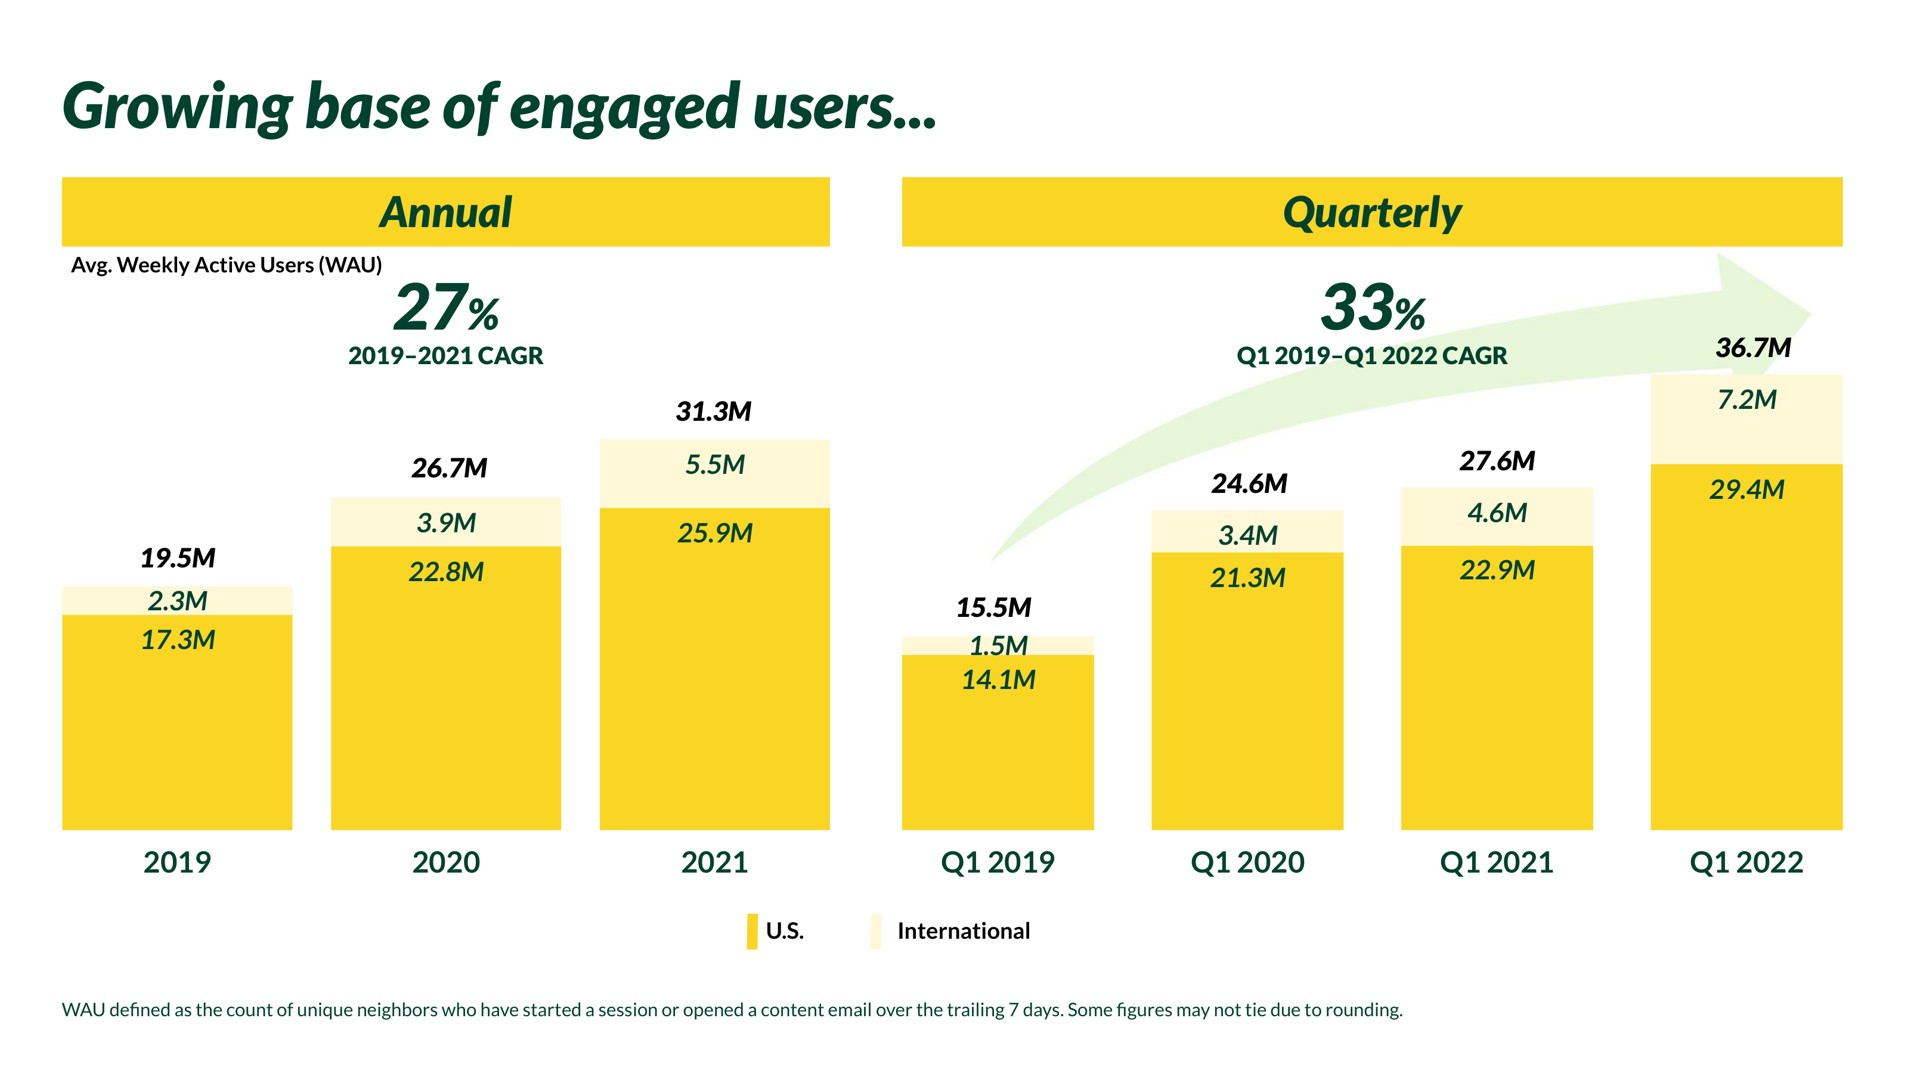 growing base of engaged users | Nextdoor